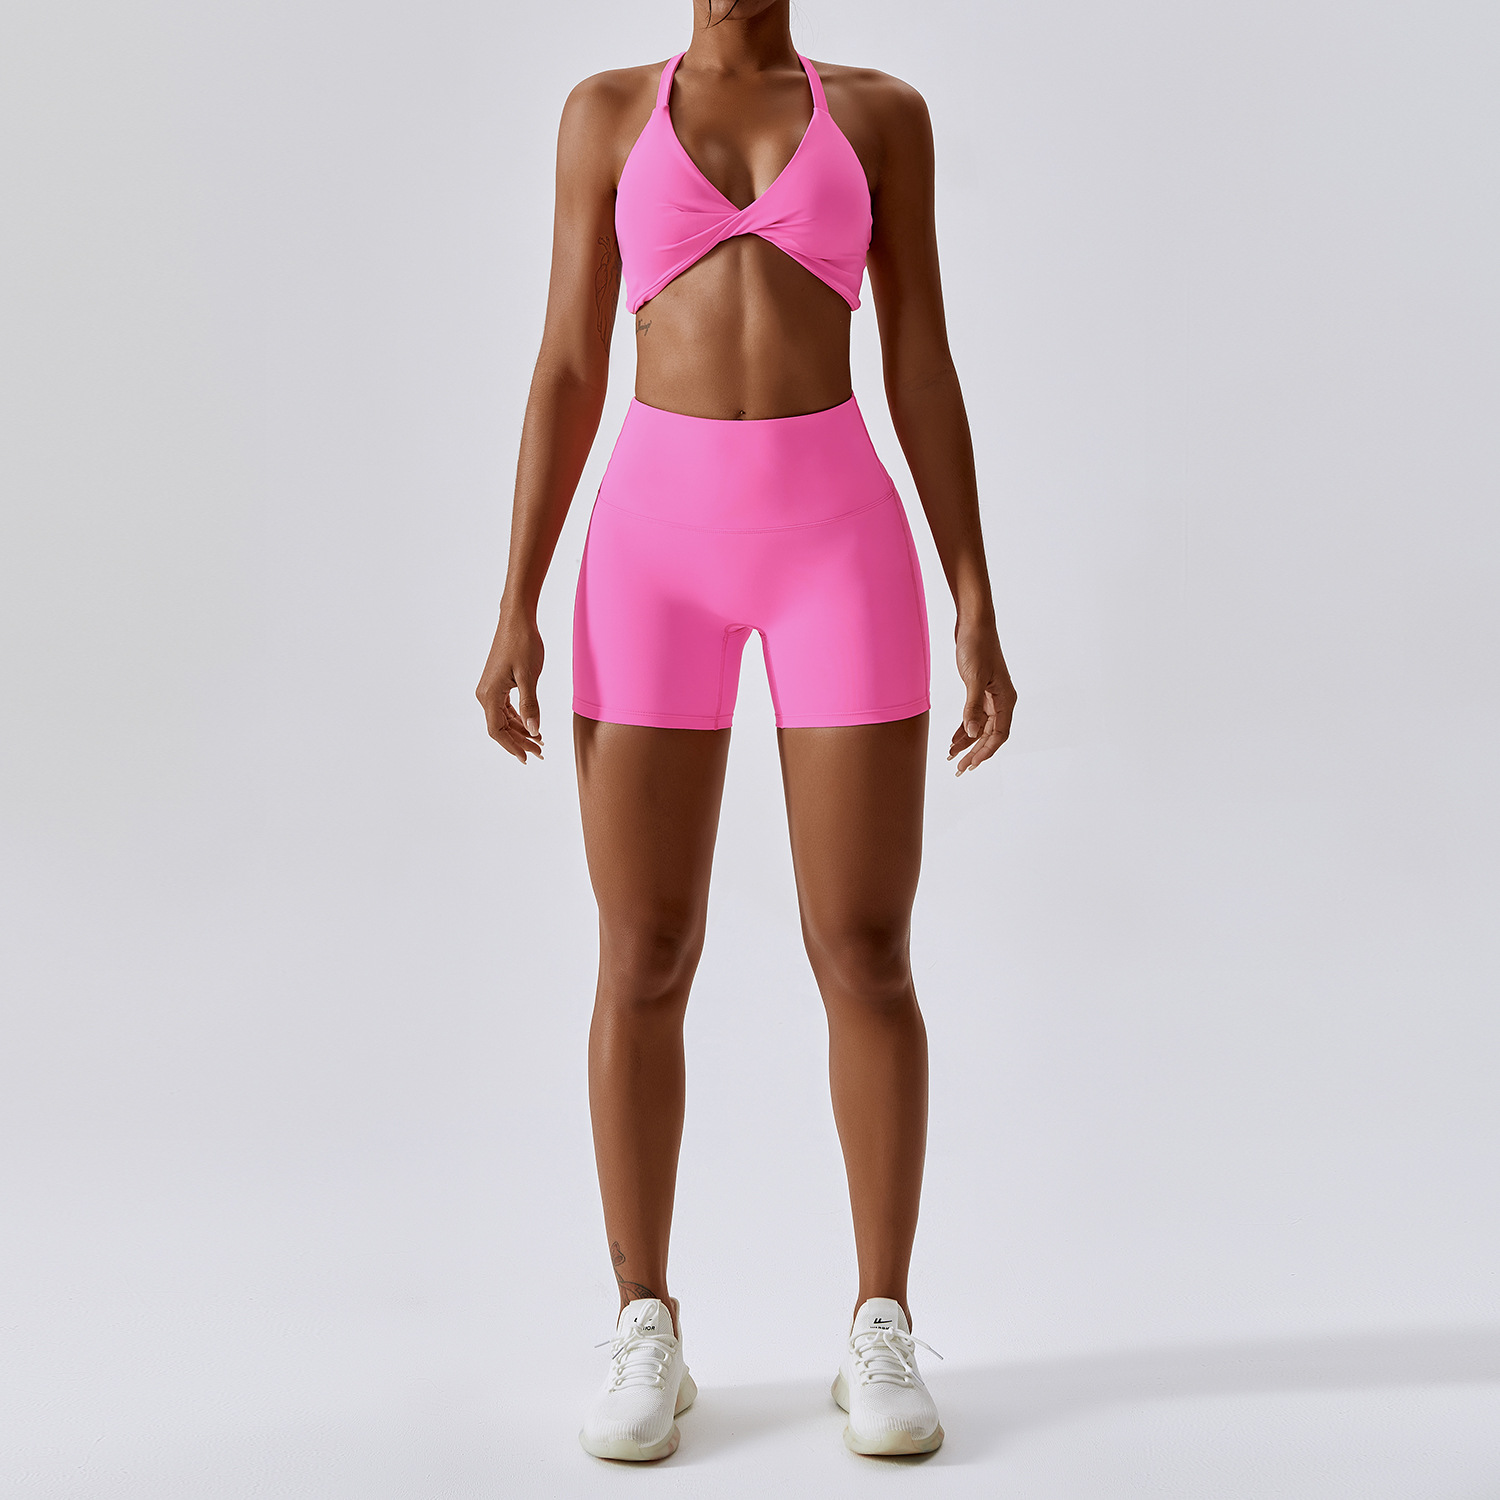 best gym leggings set bright colors